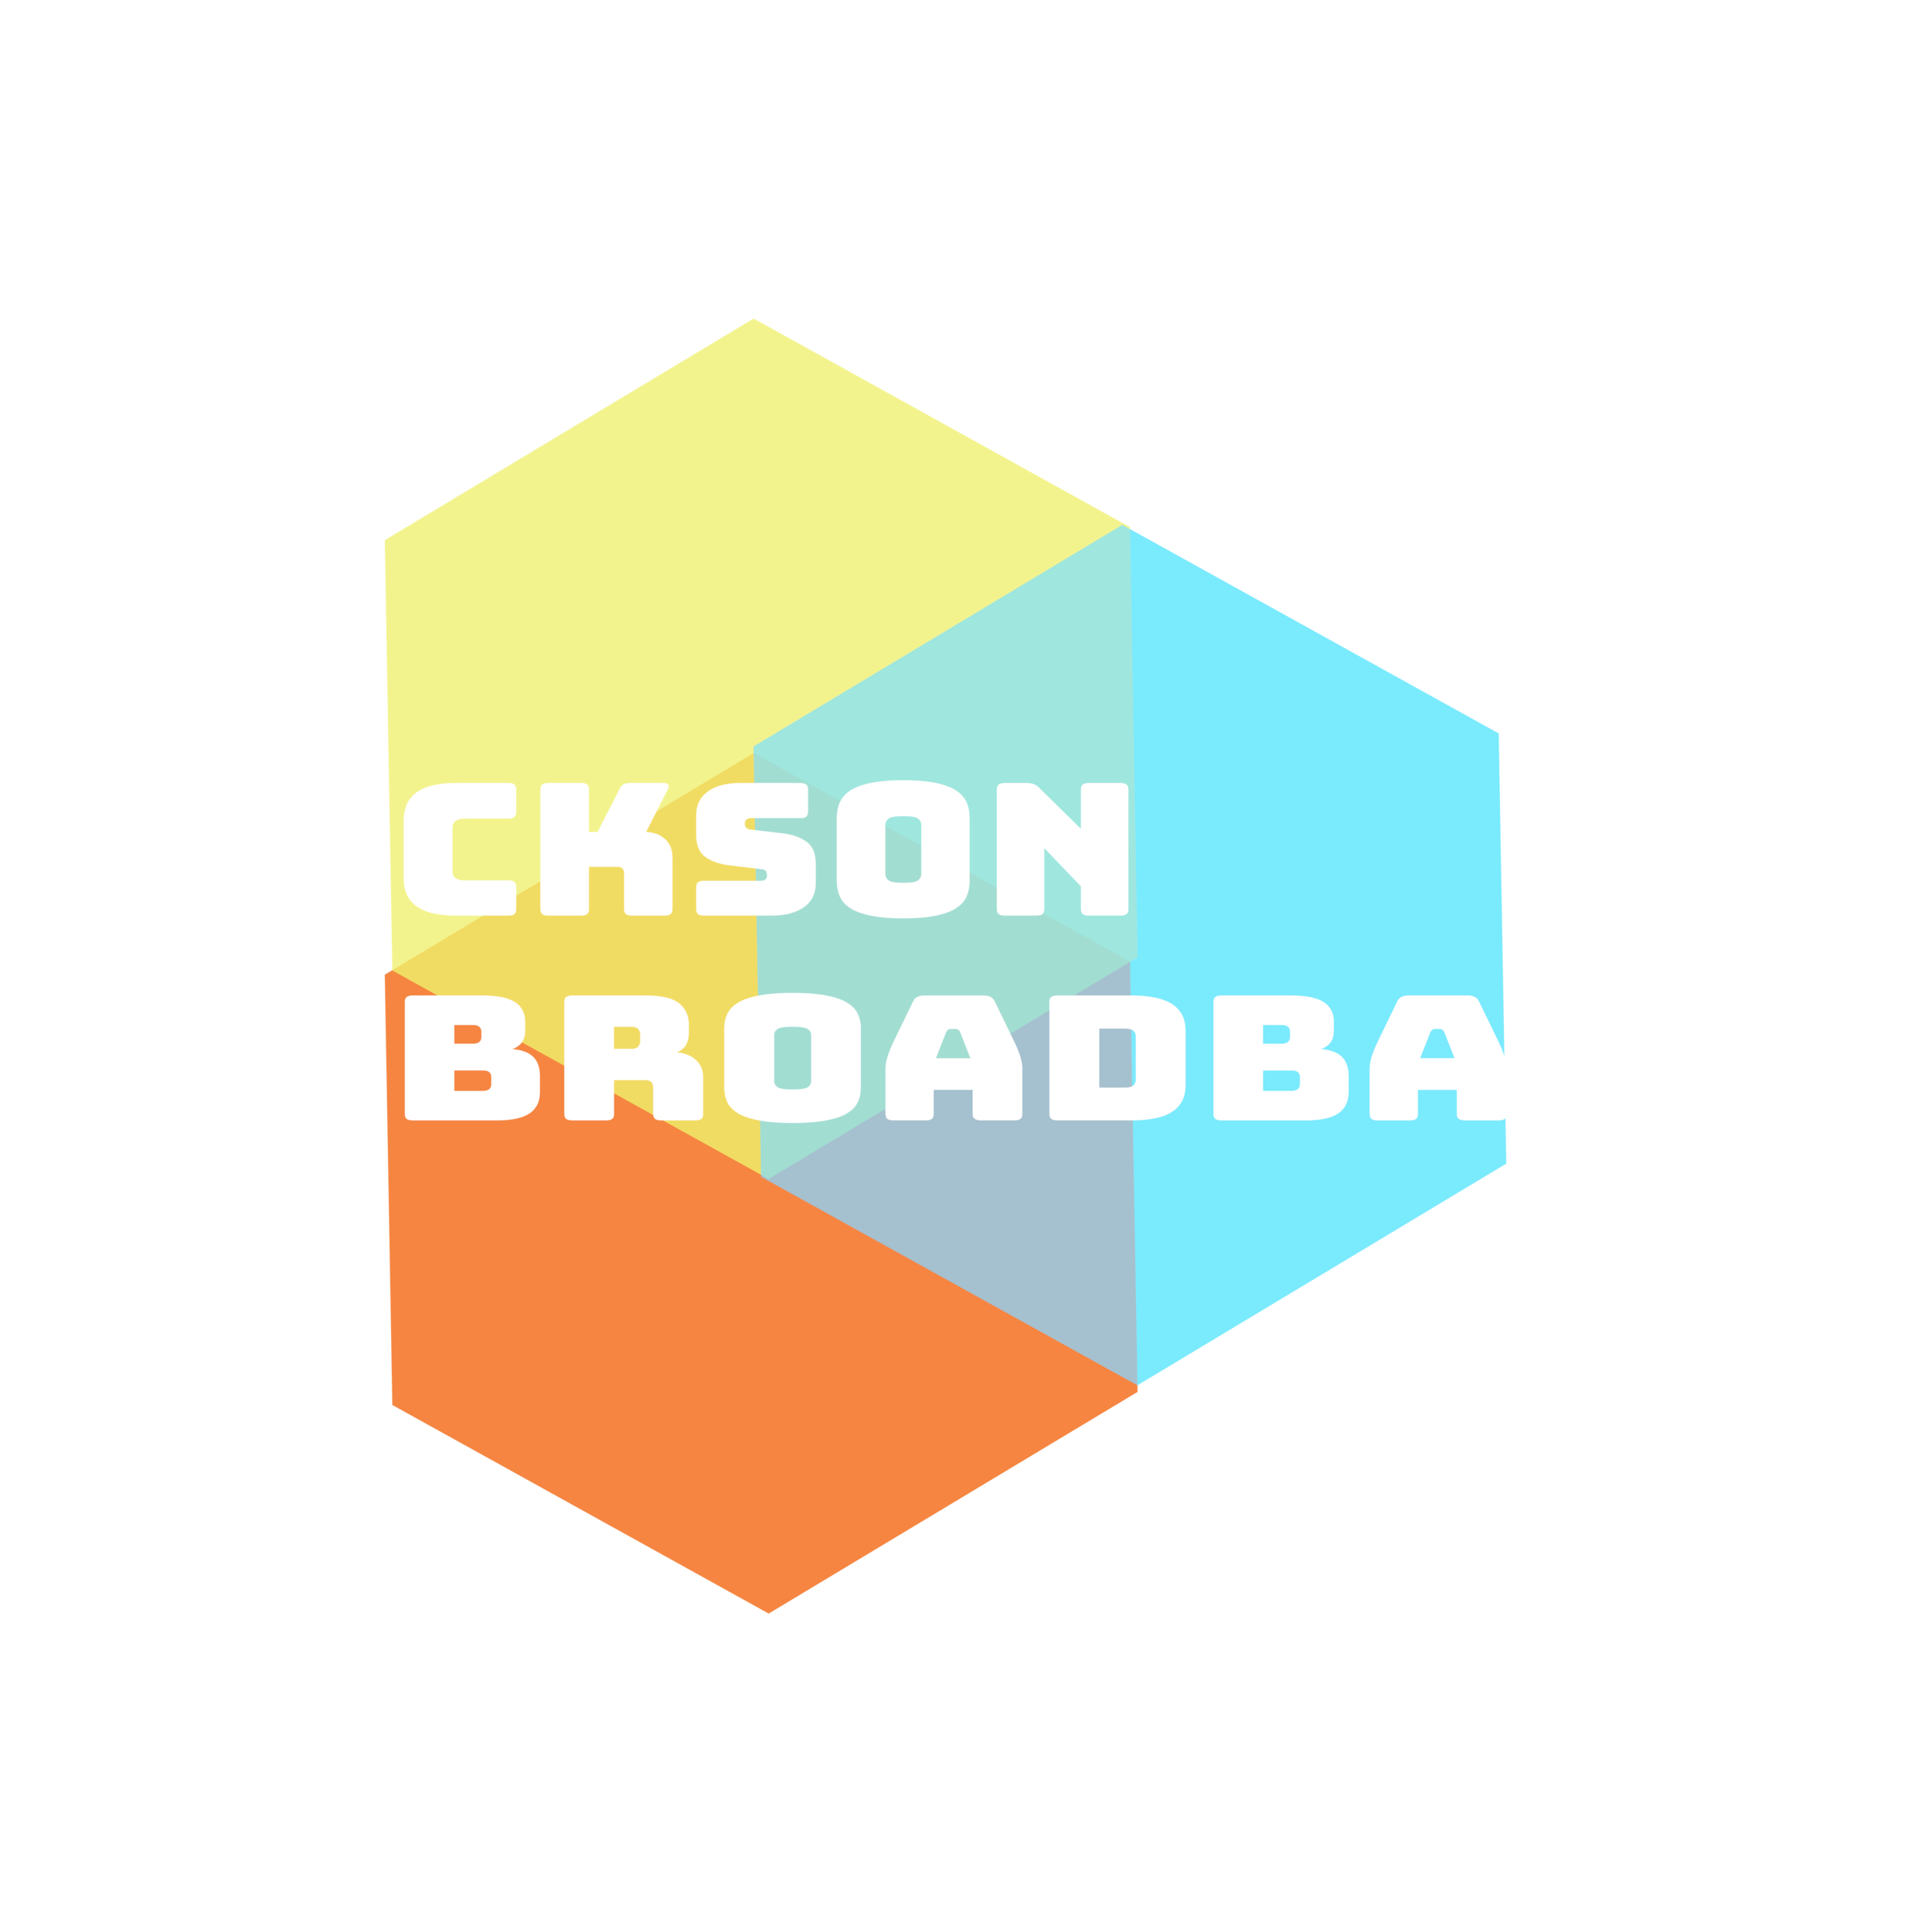 Jackson Broadband